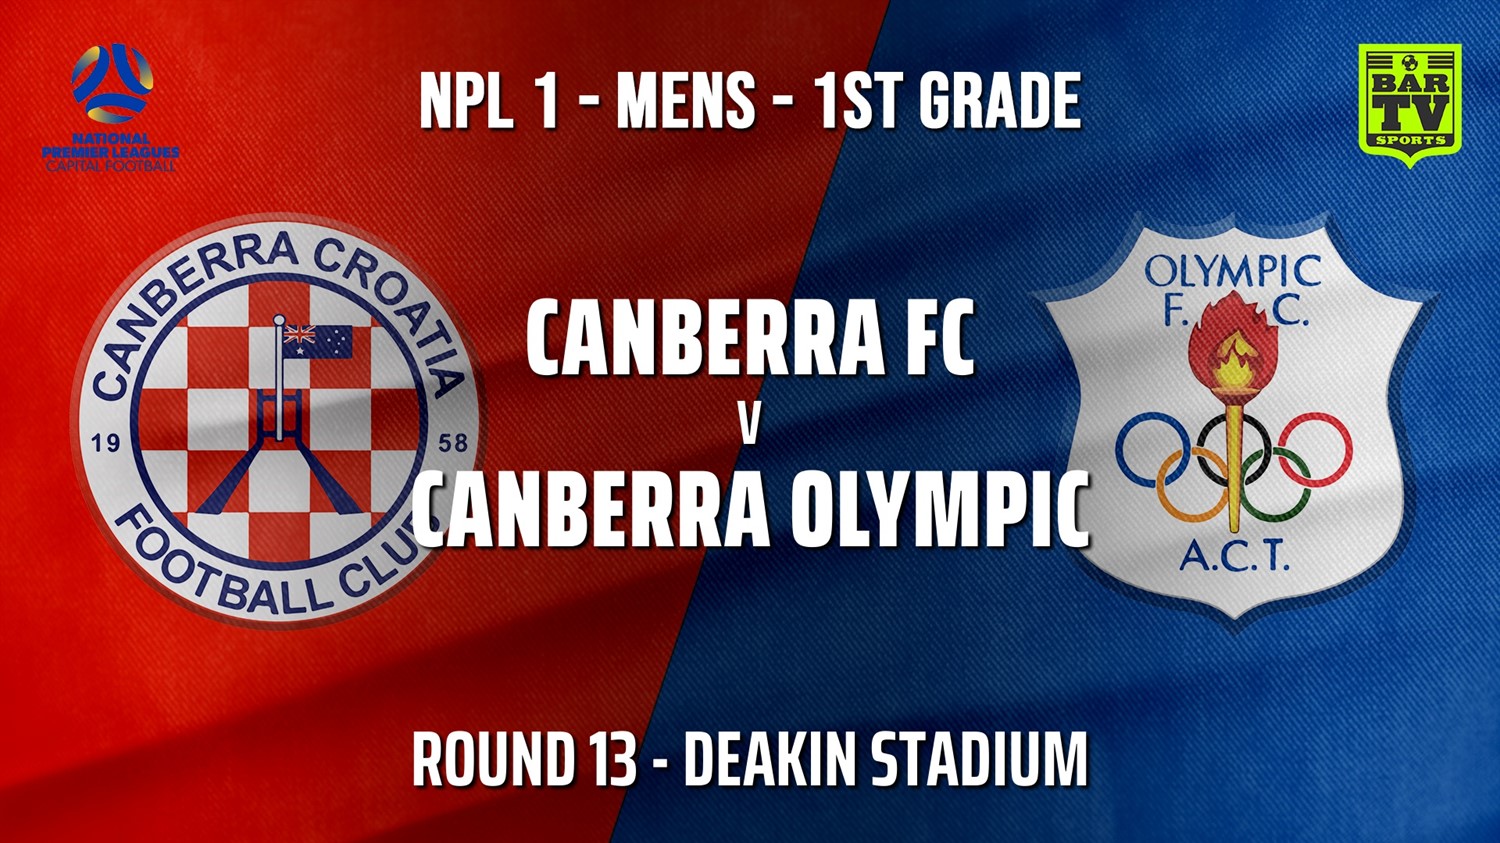 210711-Capital NPL Round 13 - Canberra FC v Canberra Olympic FC Minigame Slate Image